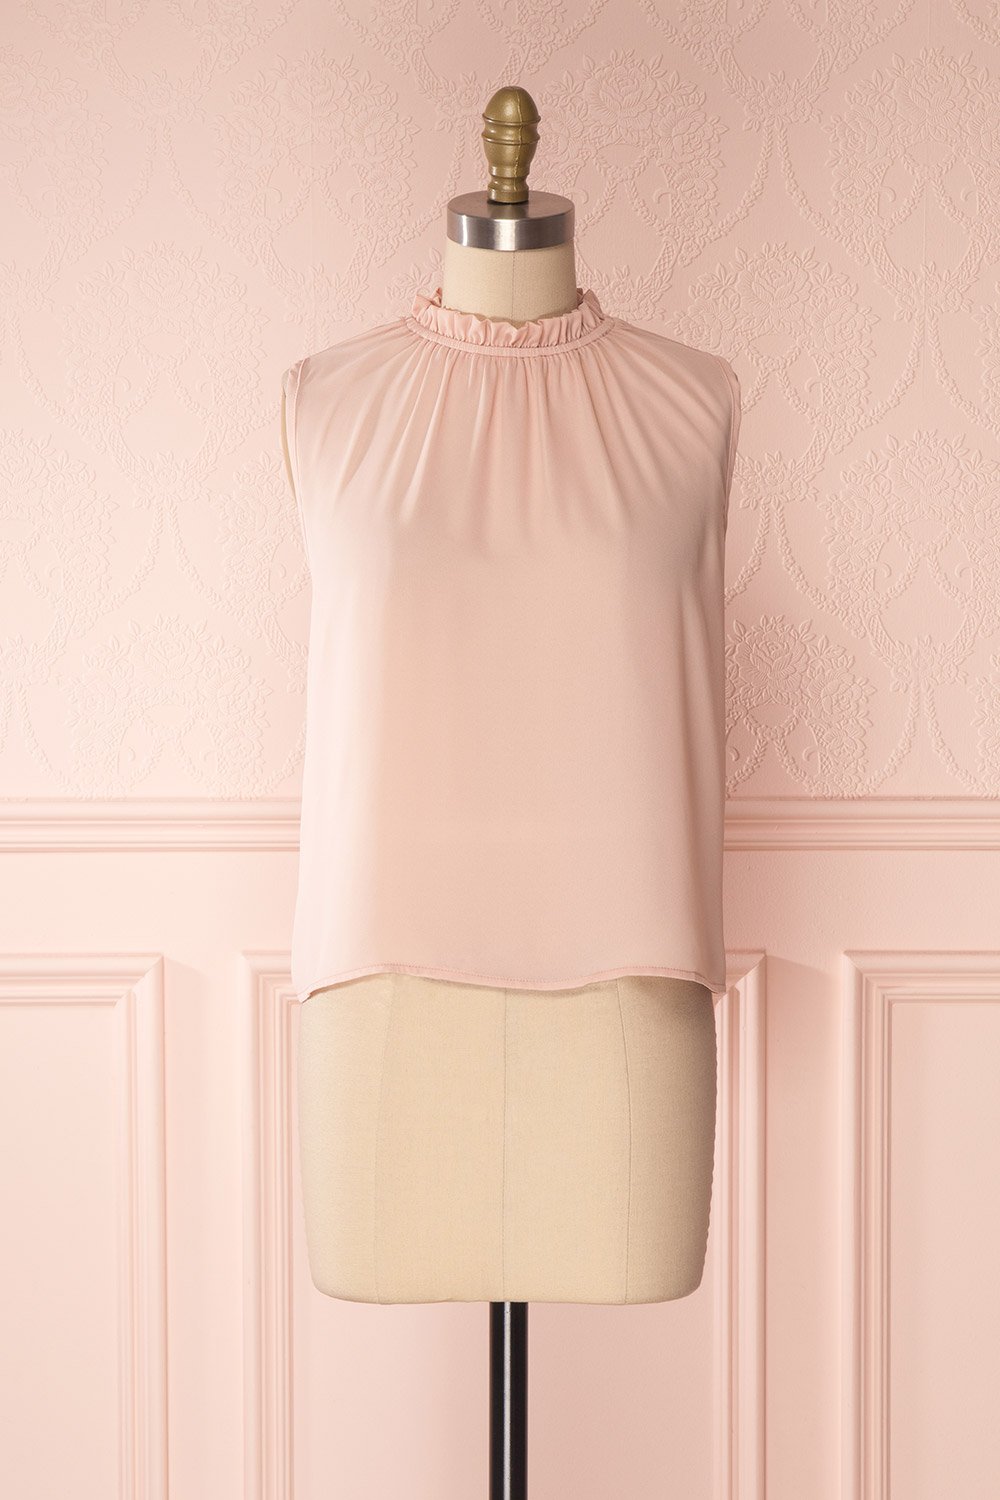 Hanabi Dusty Pink Ruffled Collar Sleeveless Top | Boutique 1861 1